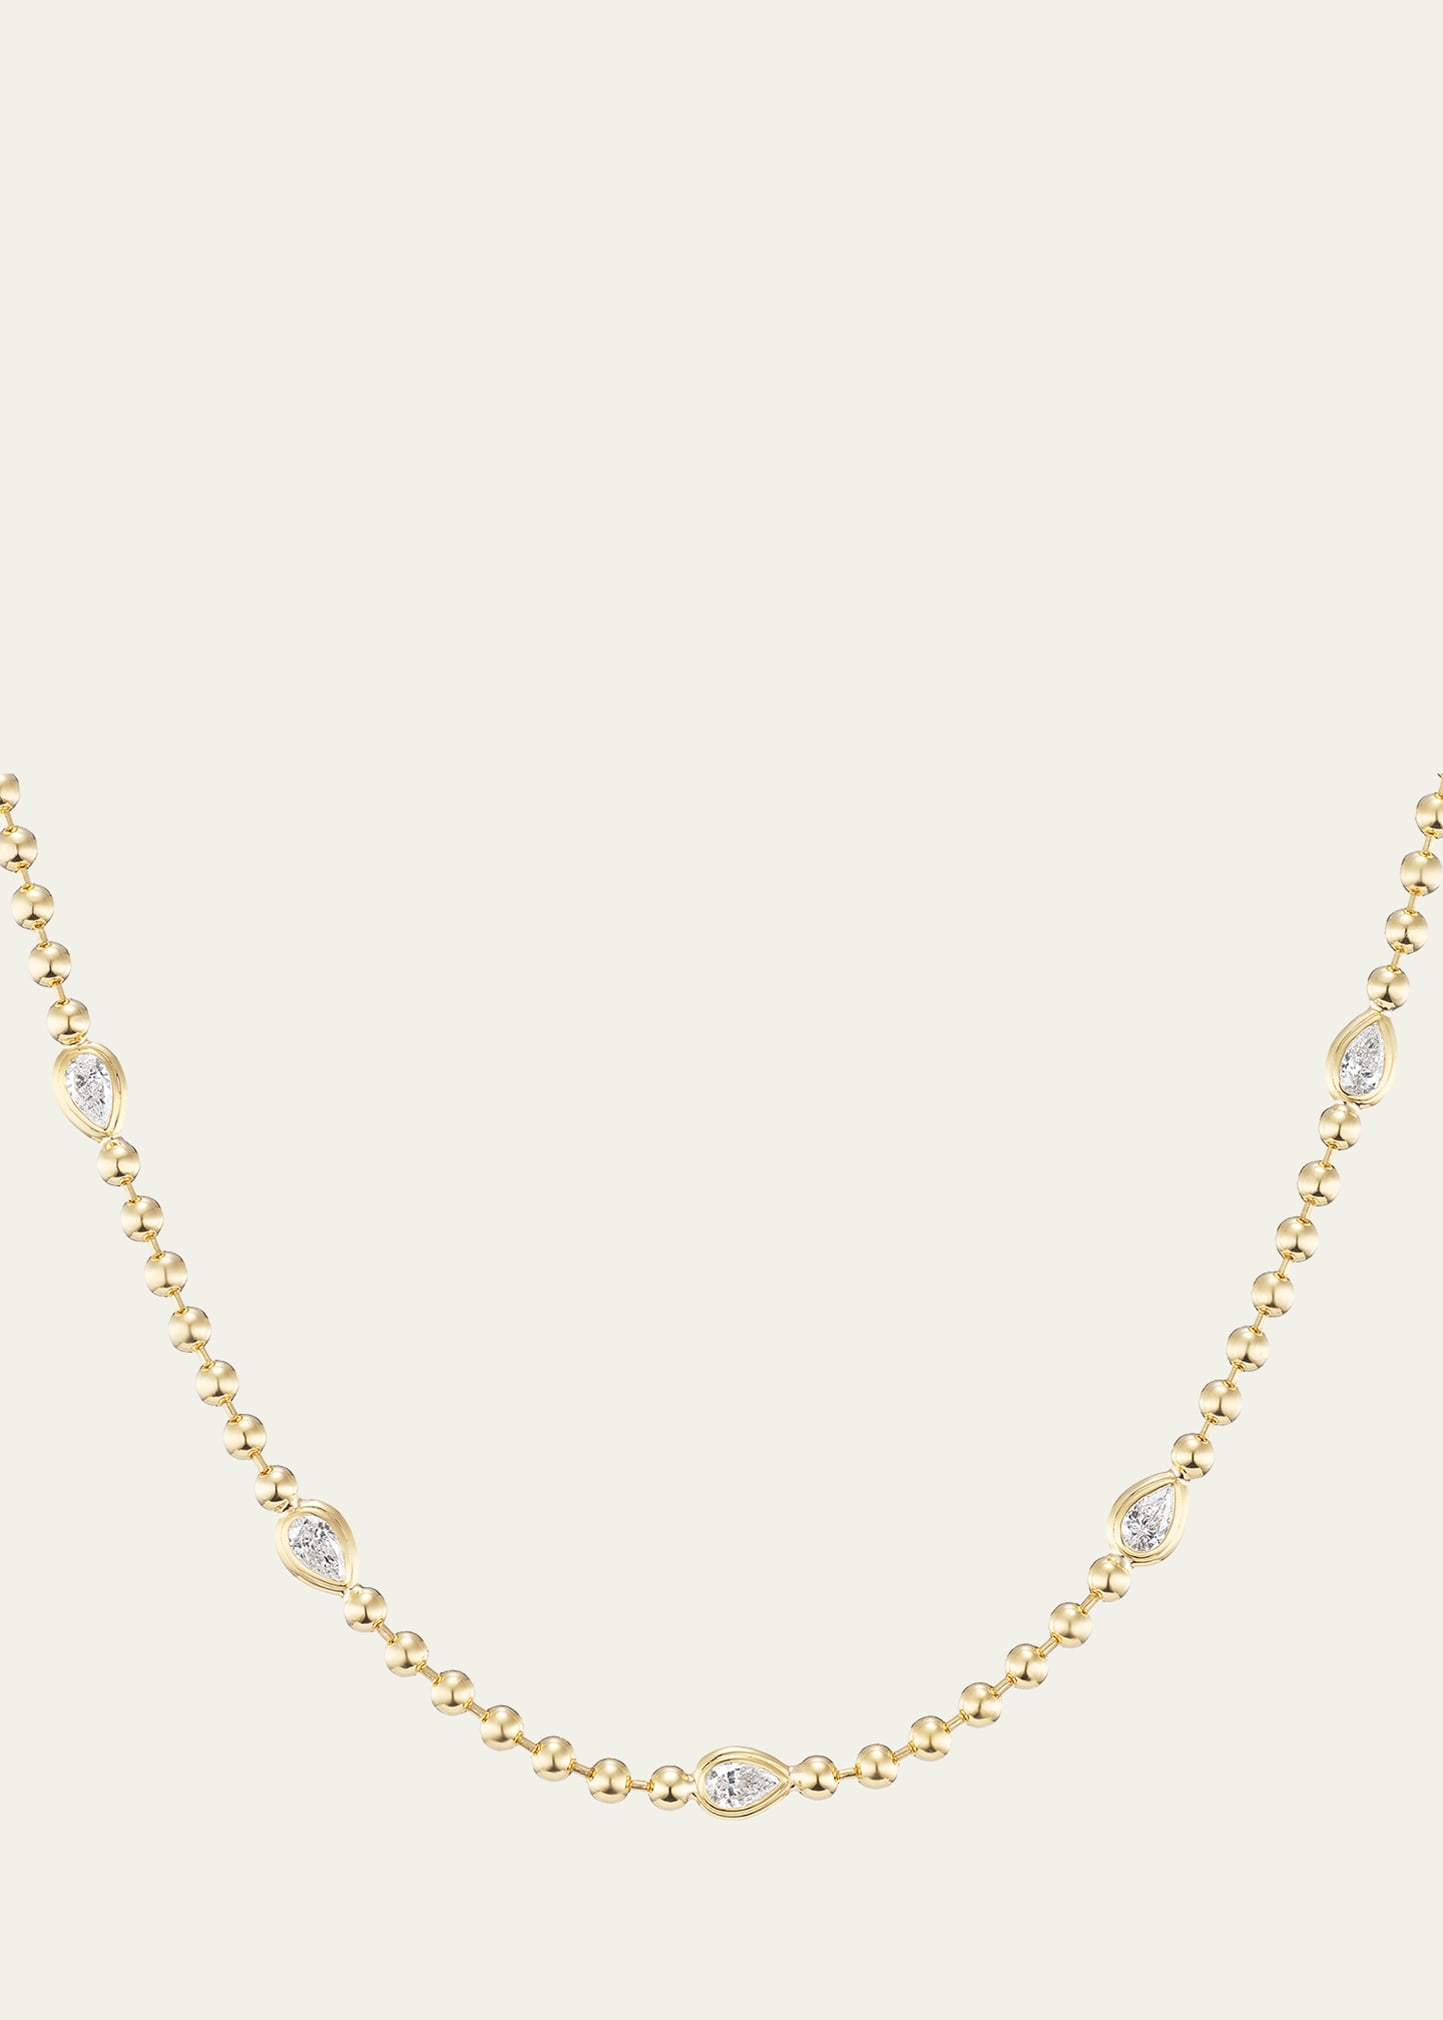 Double Bubble Bezel Diamond Pear 18K Gold Necklace, 16"